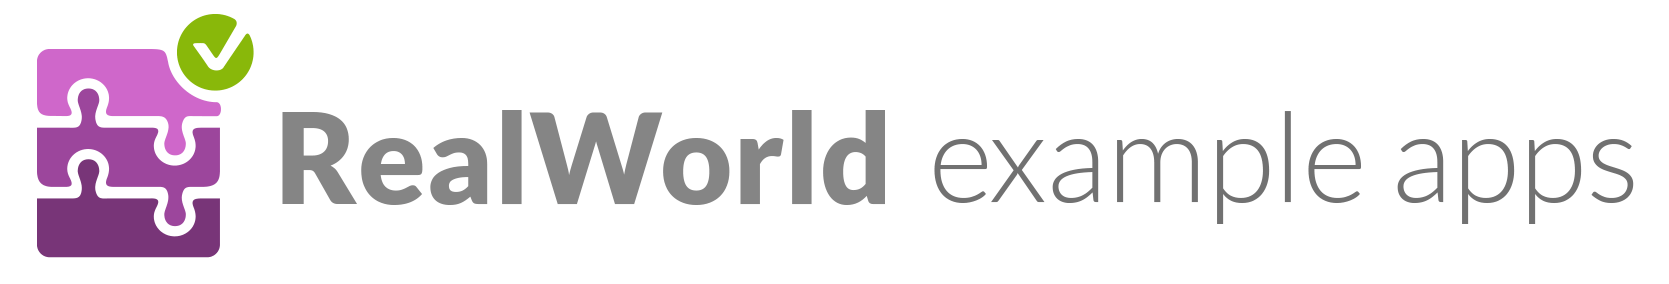 realworld_logo